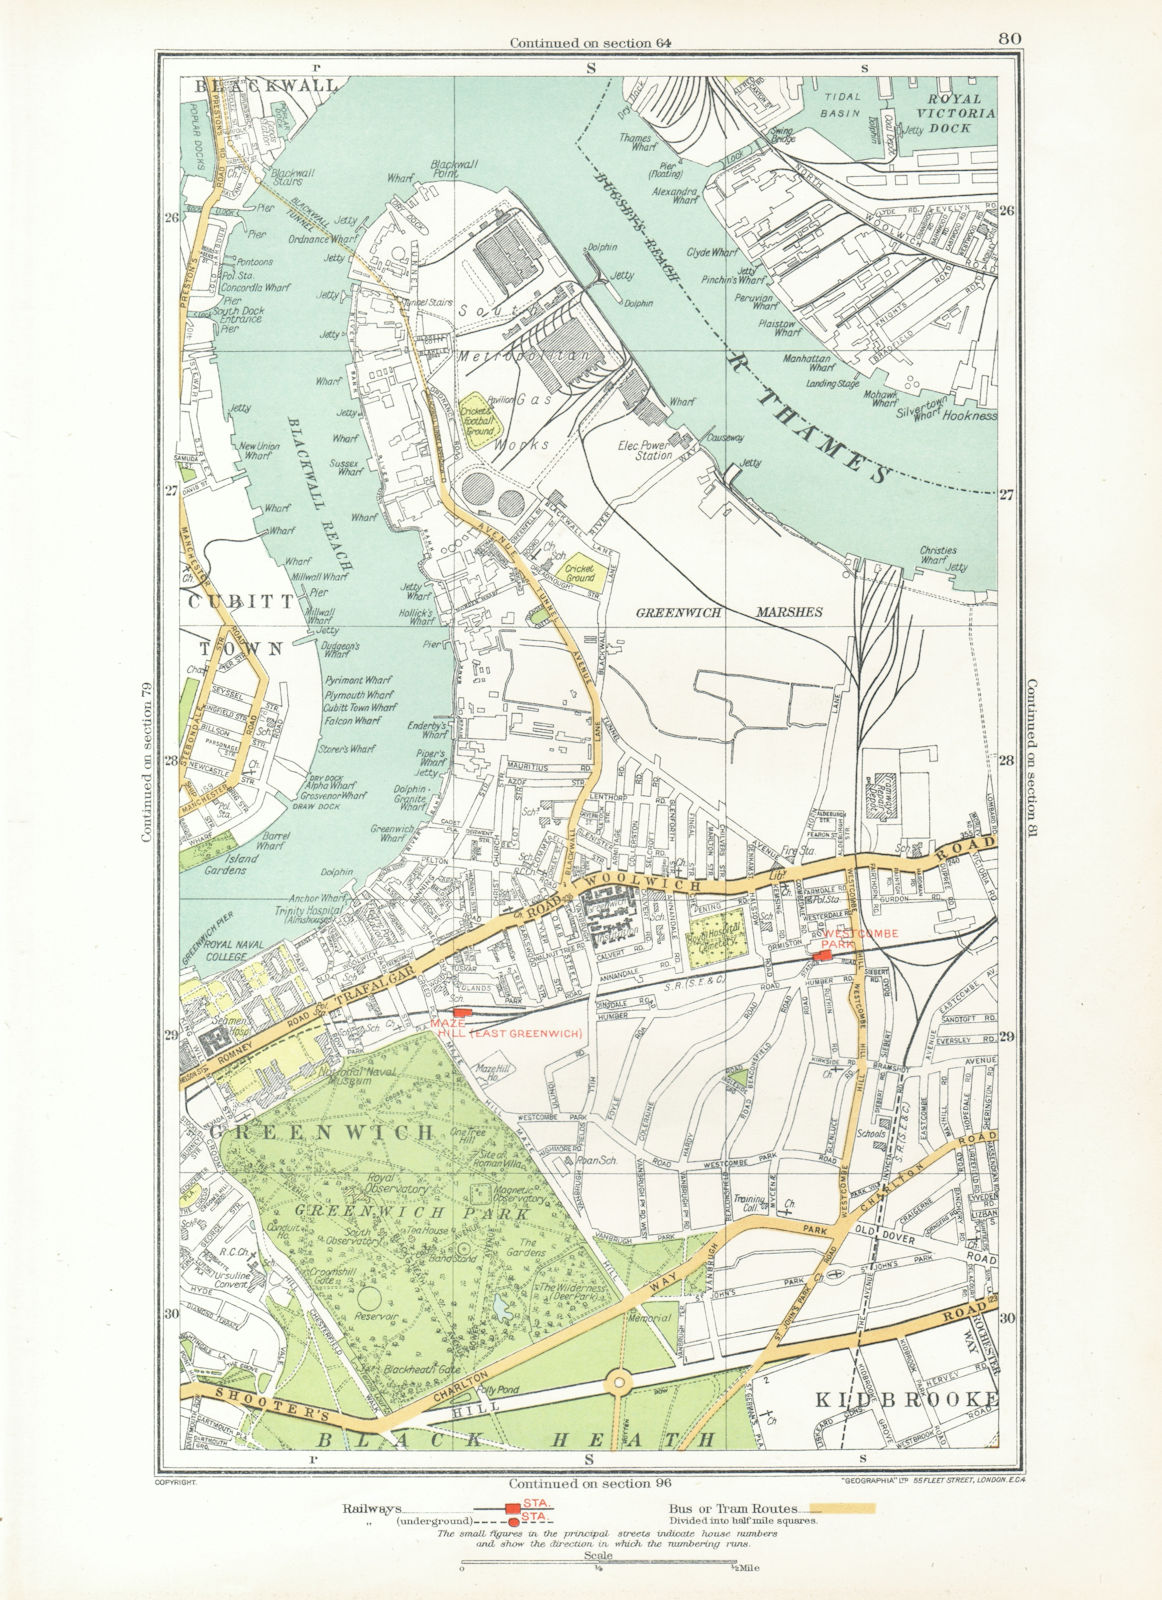 GREENWICH. Blackwall Cubitt Town Silvertown Kidbrooke Maze Hill 1933 old map